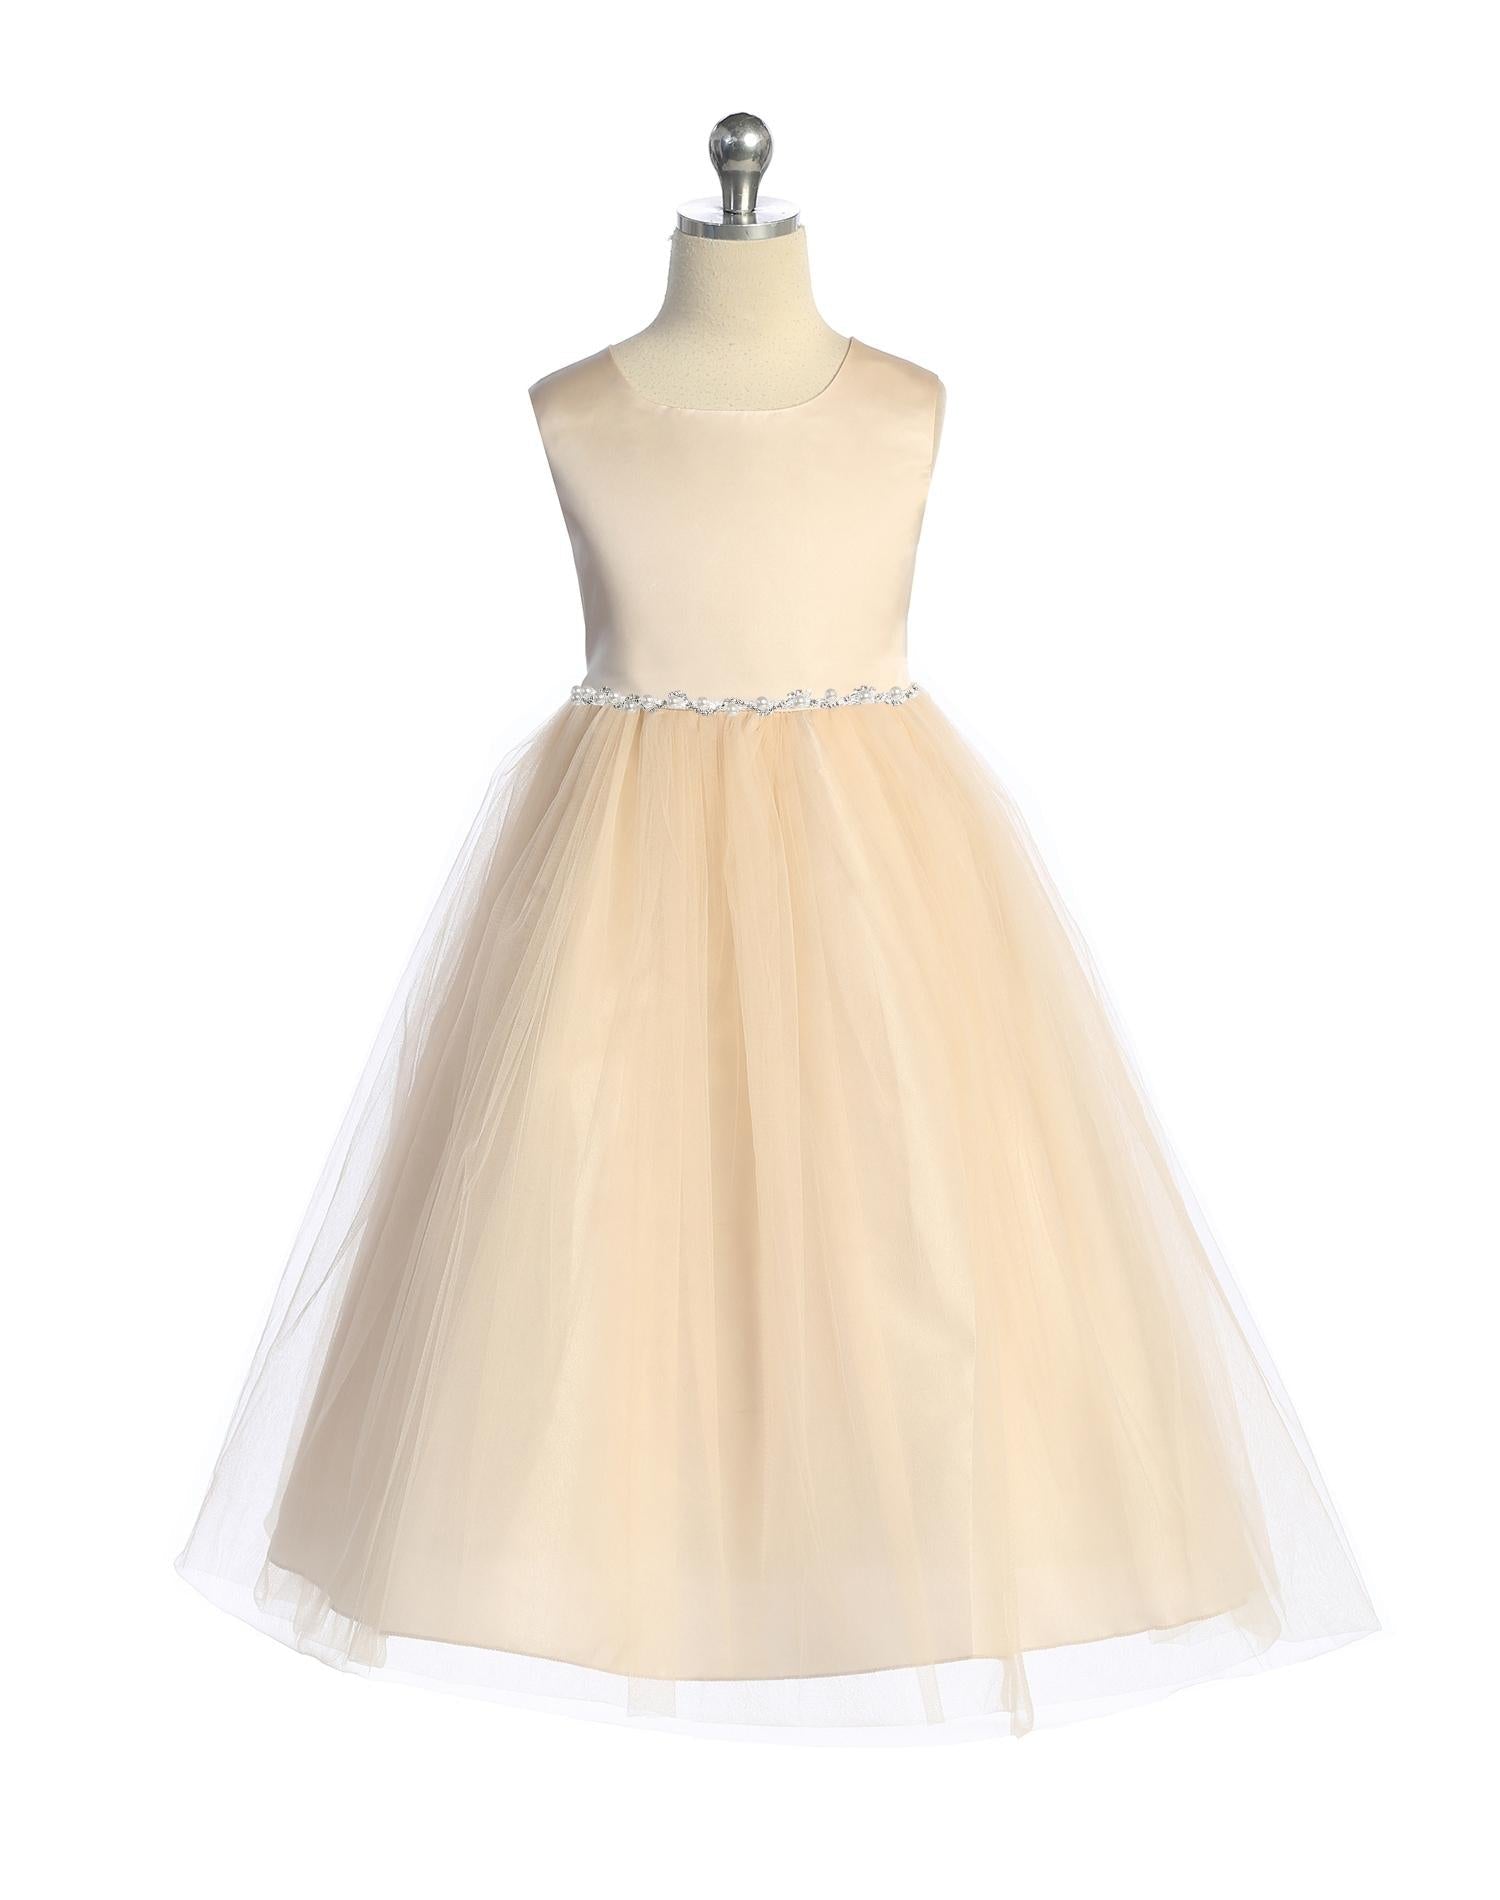 Dress - Satin Top Dress W/ Wavy Rhinestone & Pearl Trim